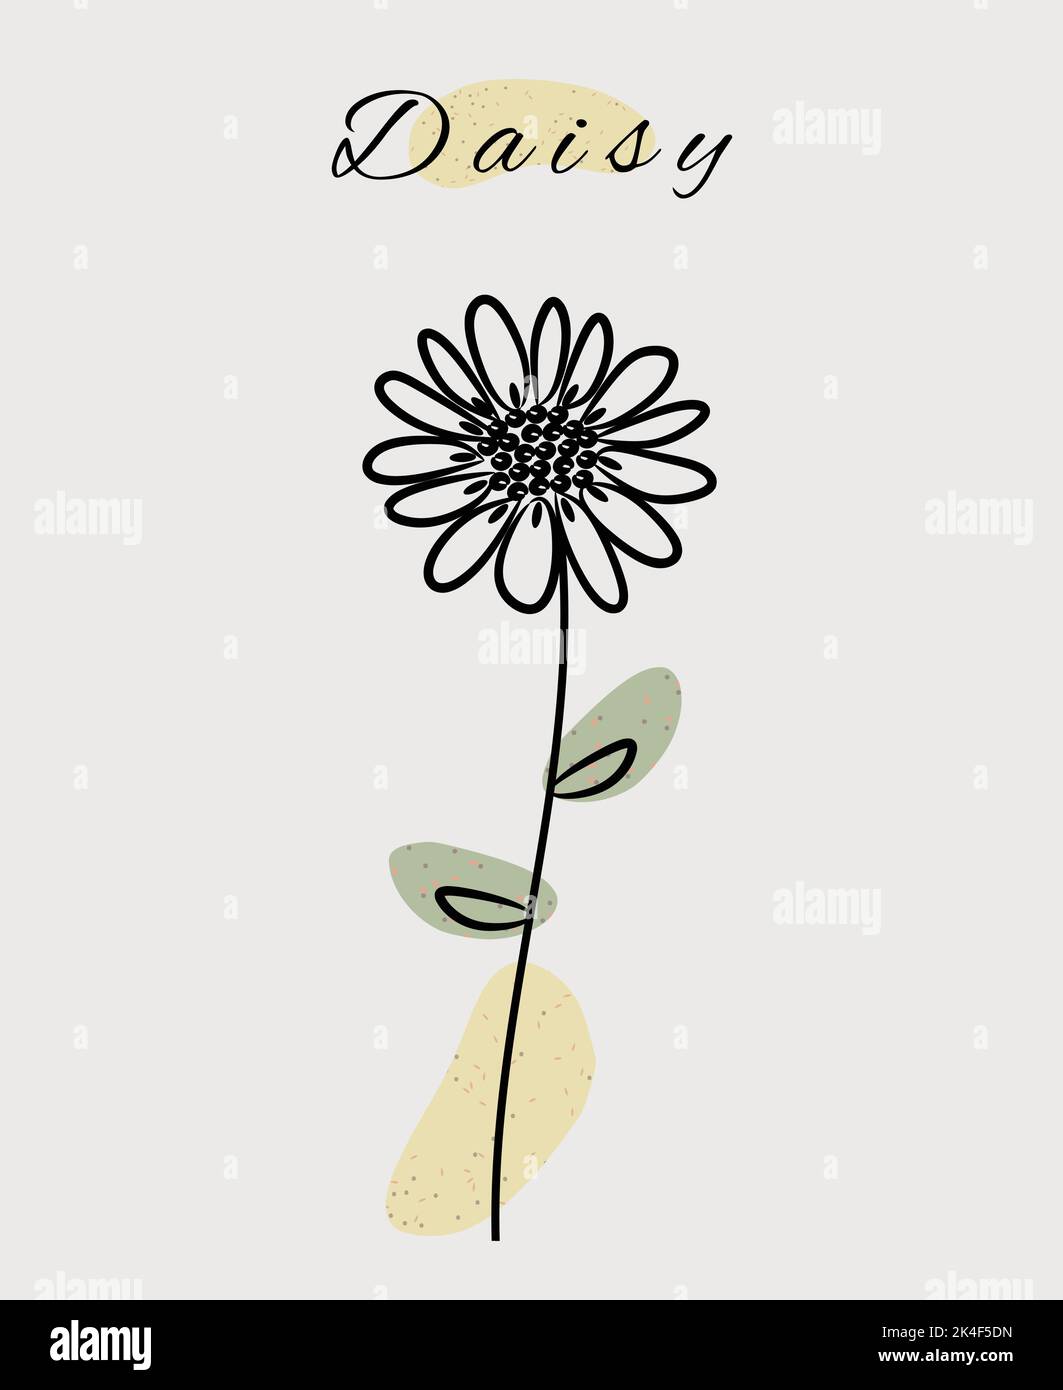 Daisy flower botanical minimal art element, poster, or wall art illustration with organic shape. Stock Vector